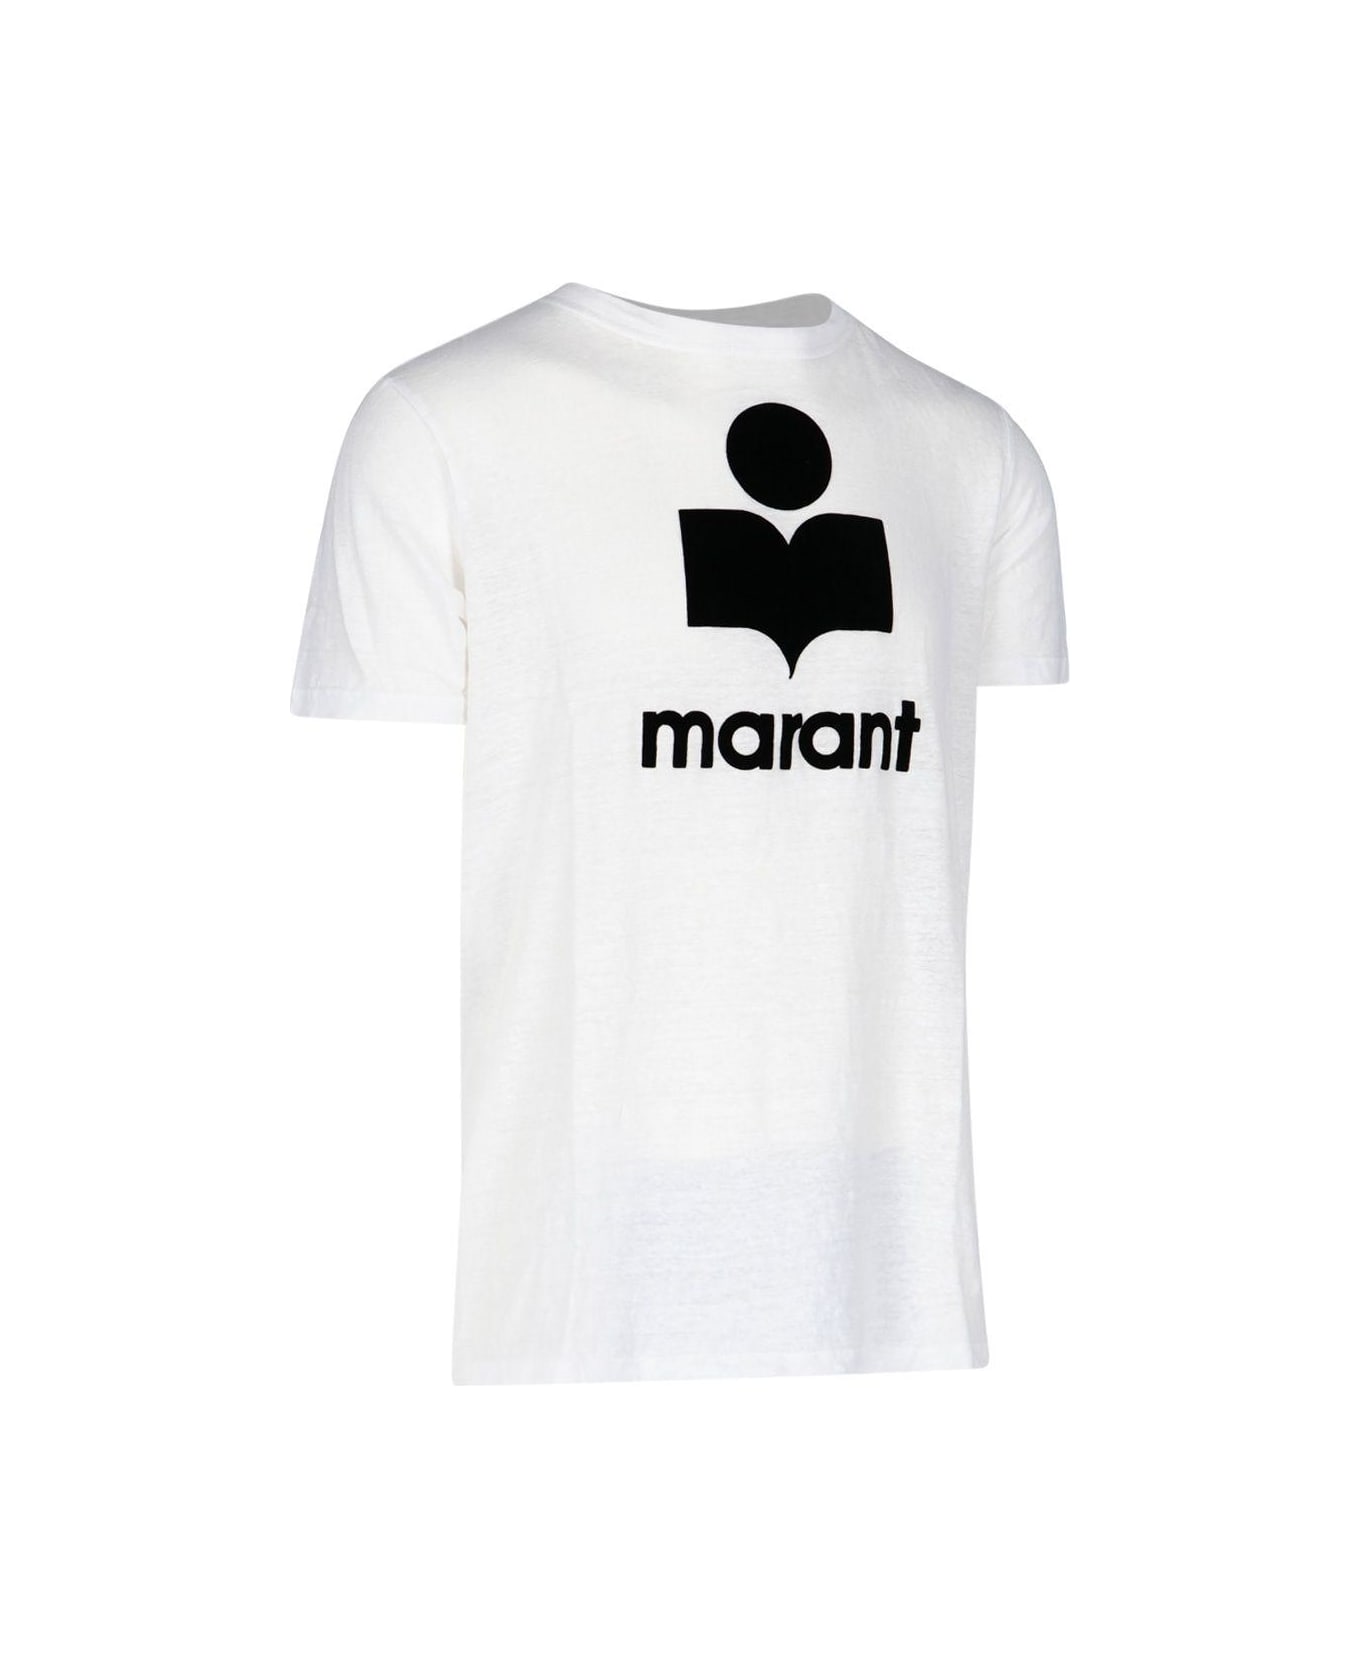 Isabel Marant 'karman' T-shirt - White シャツ